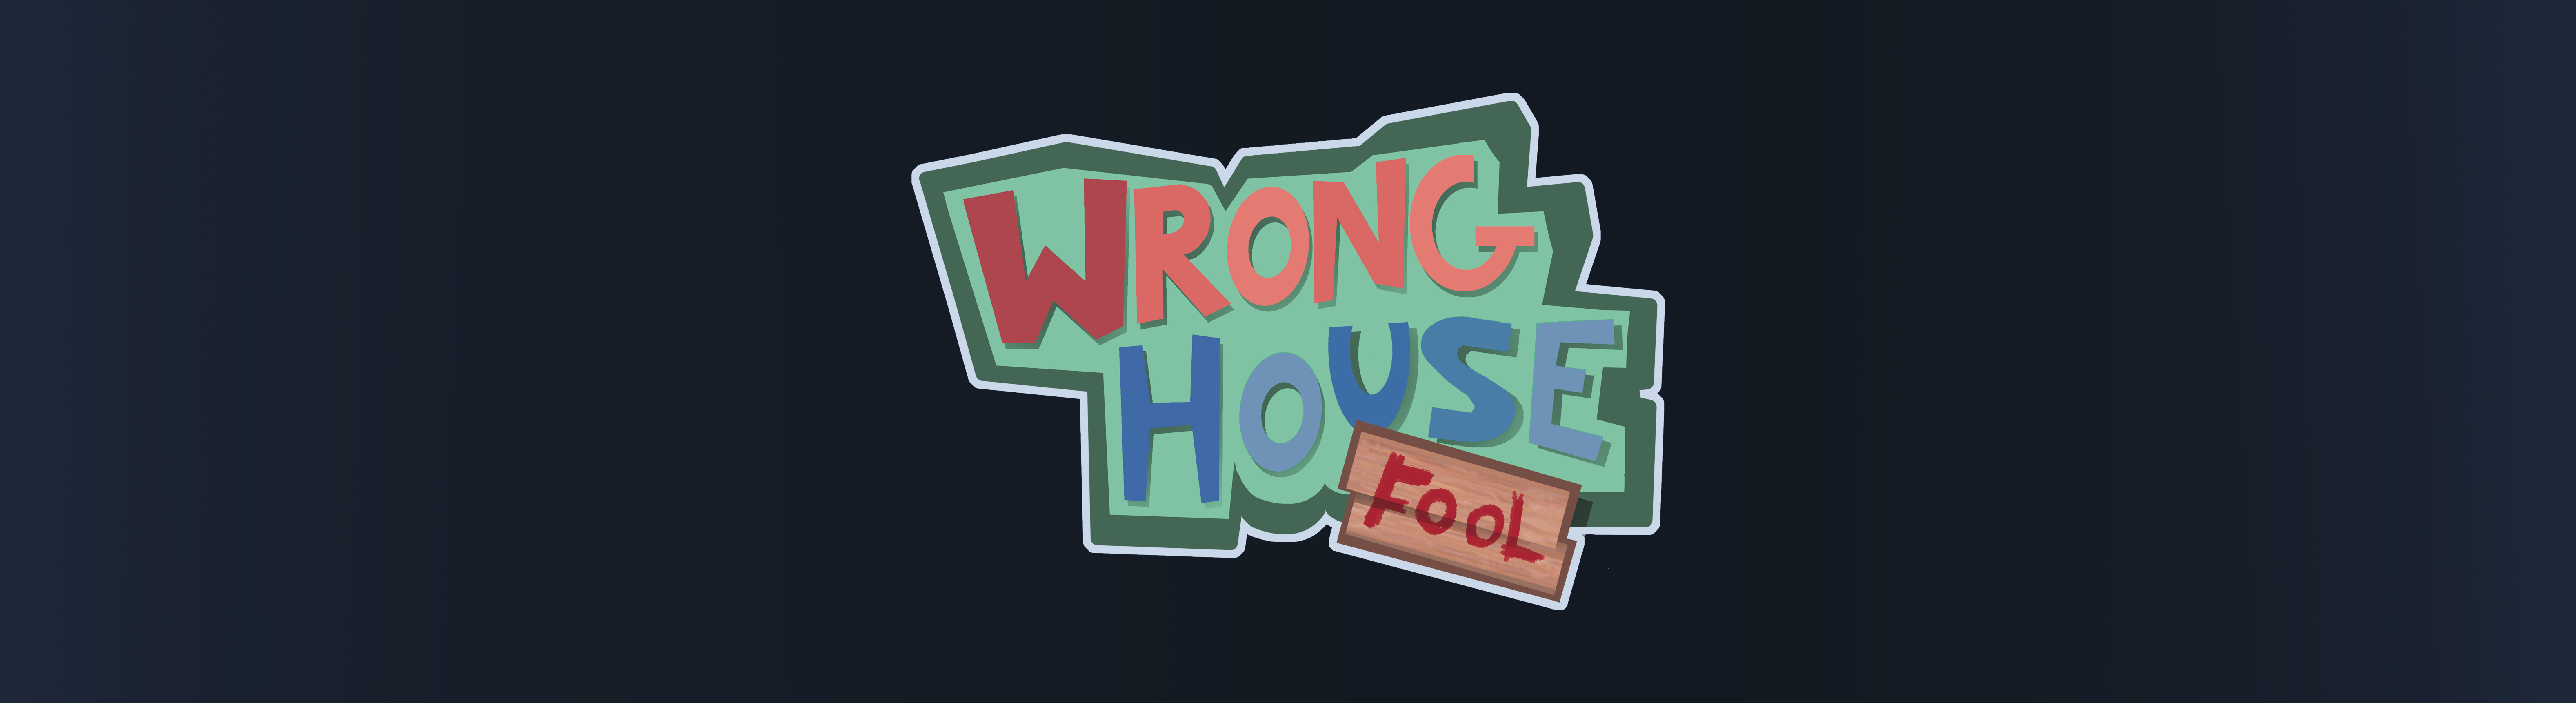 Wrong House, FOOL!